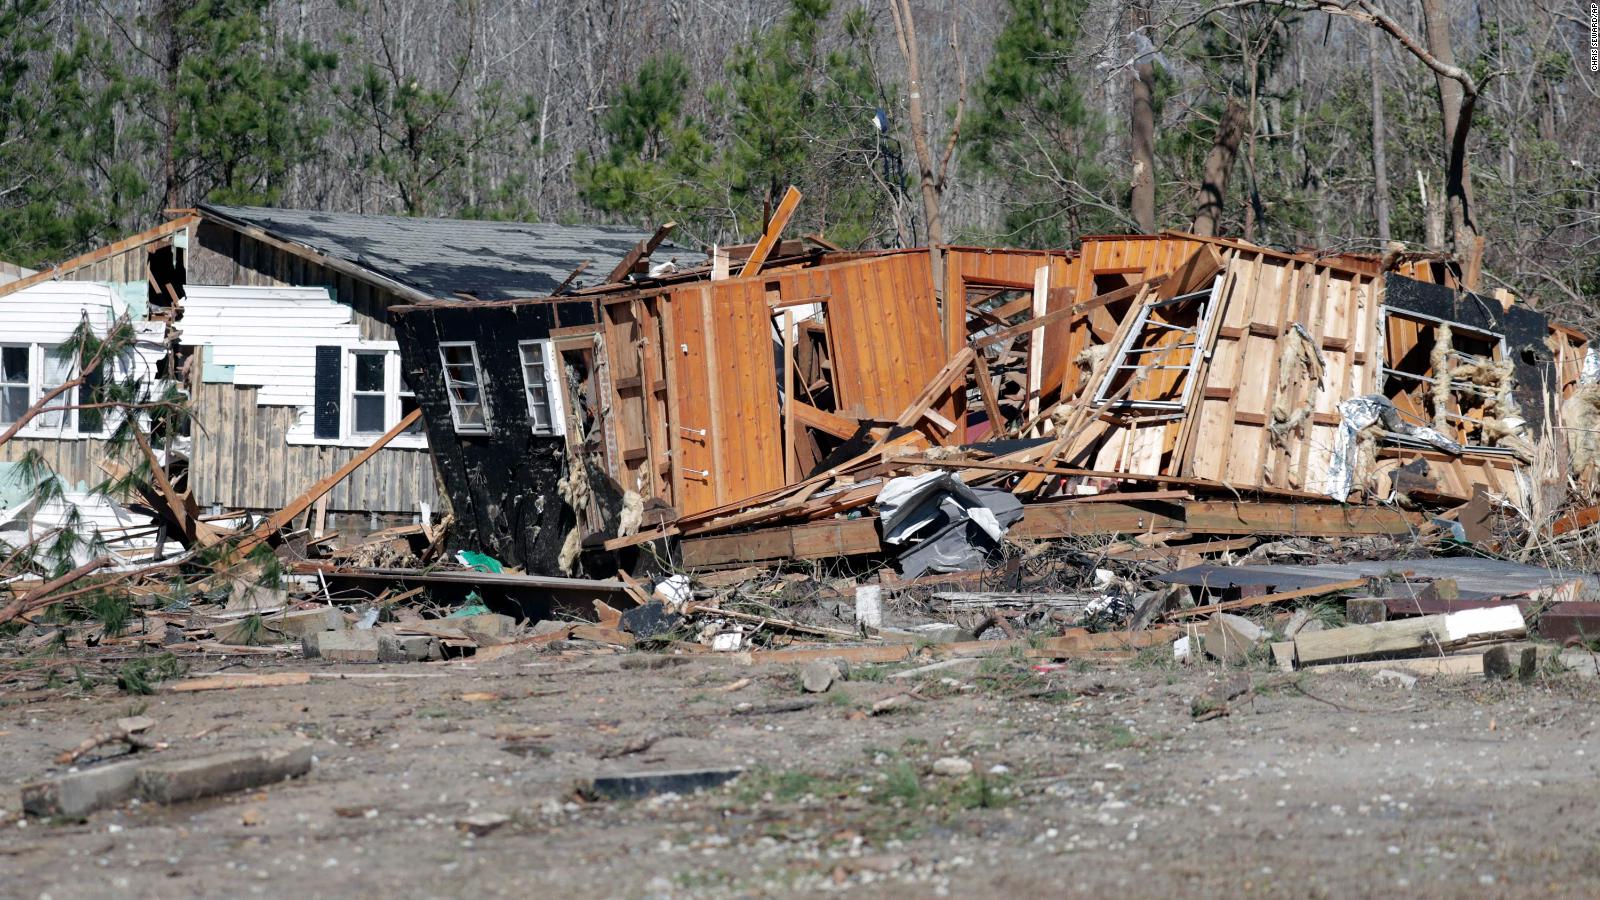 North Carolina tornado 3 people were killed and 10 more injured in